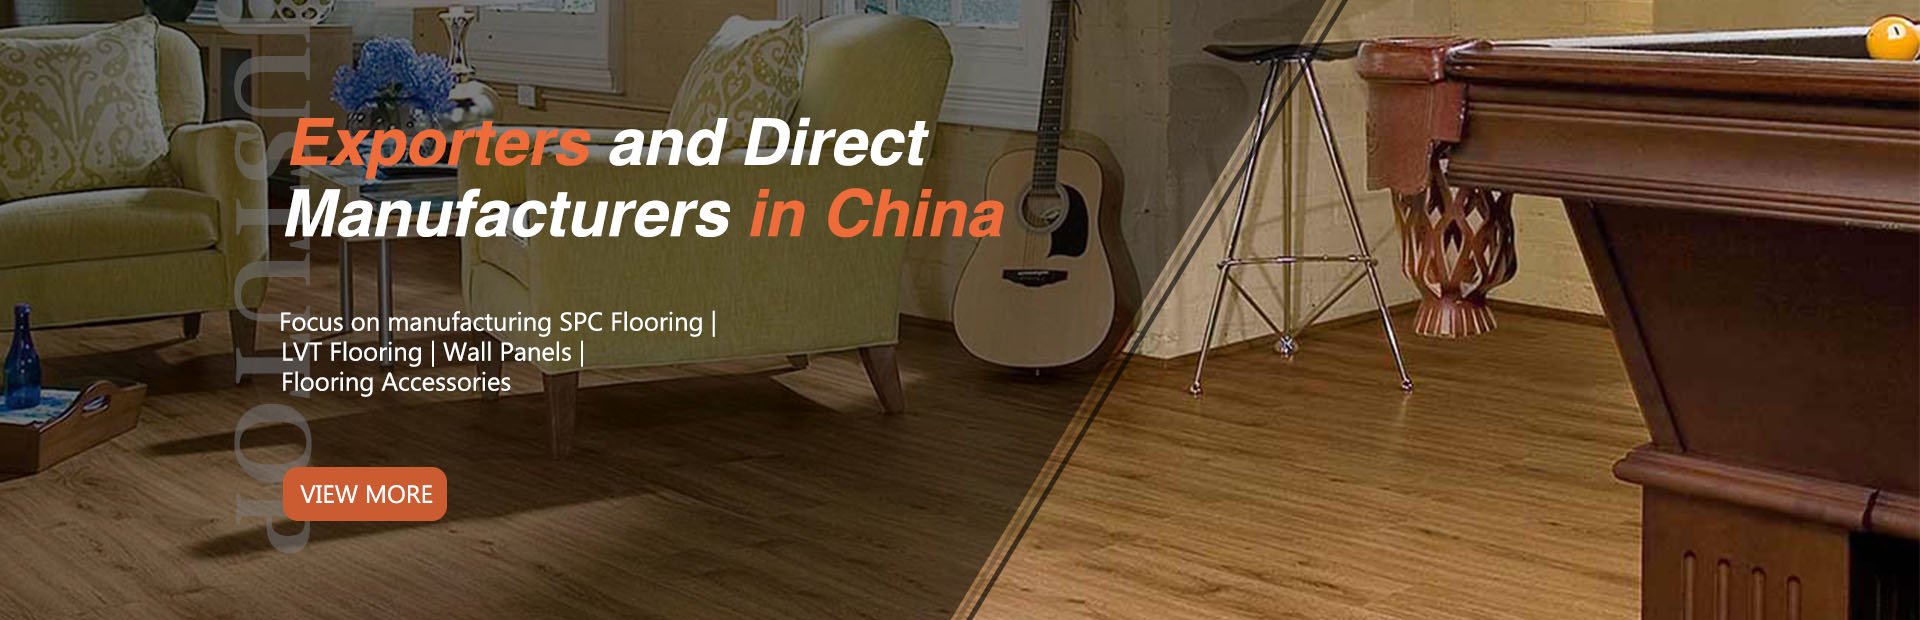 fornecedor de pisos lvt na china